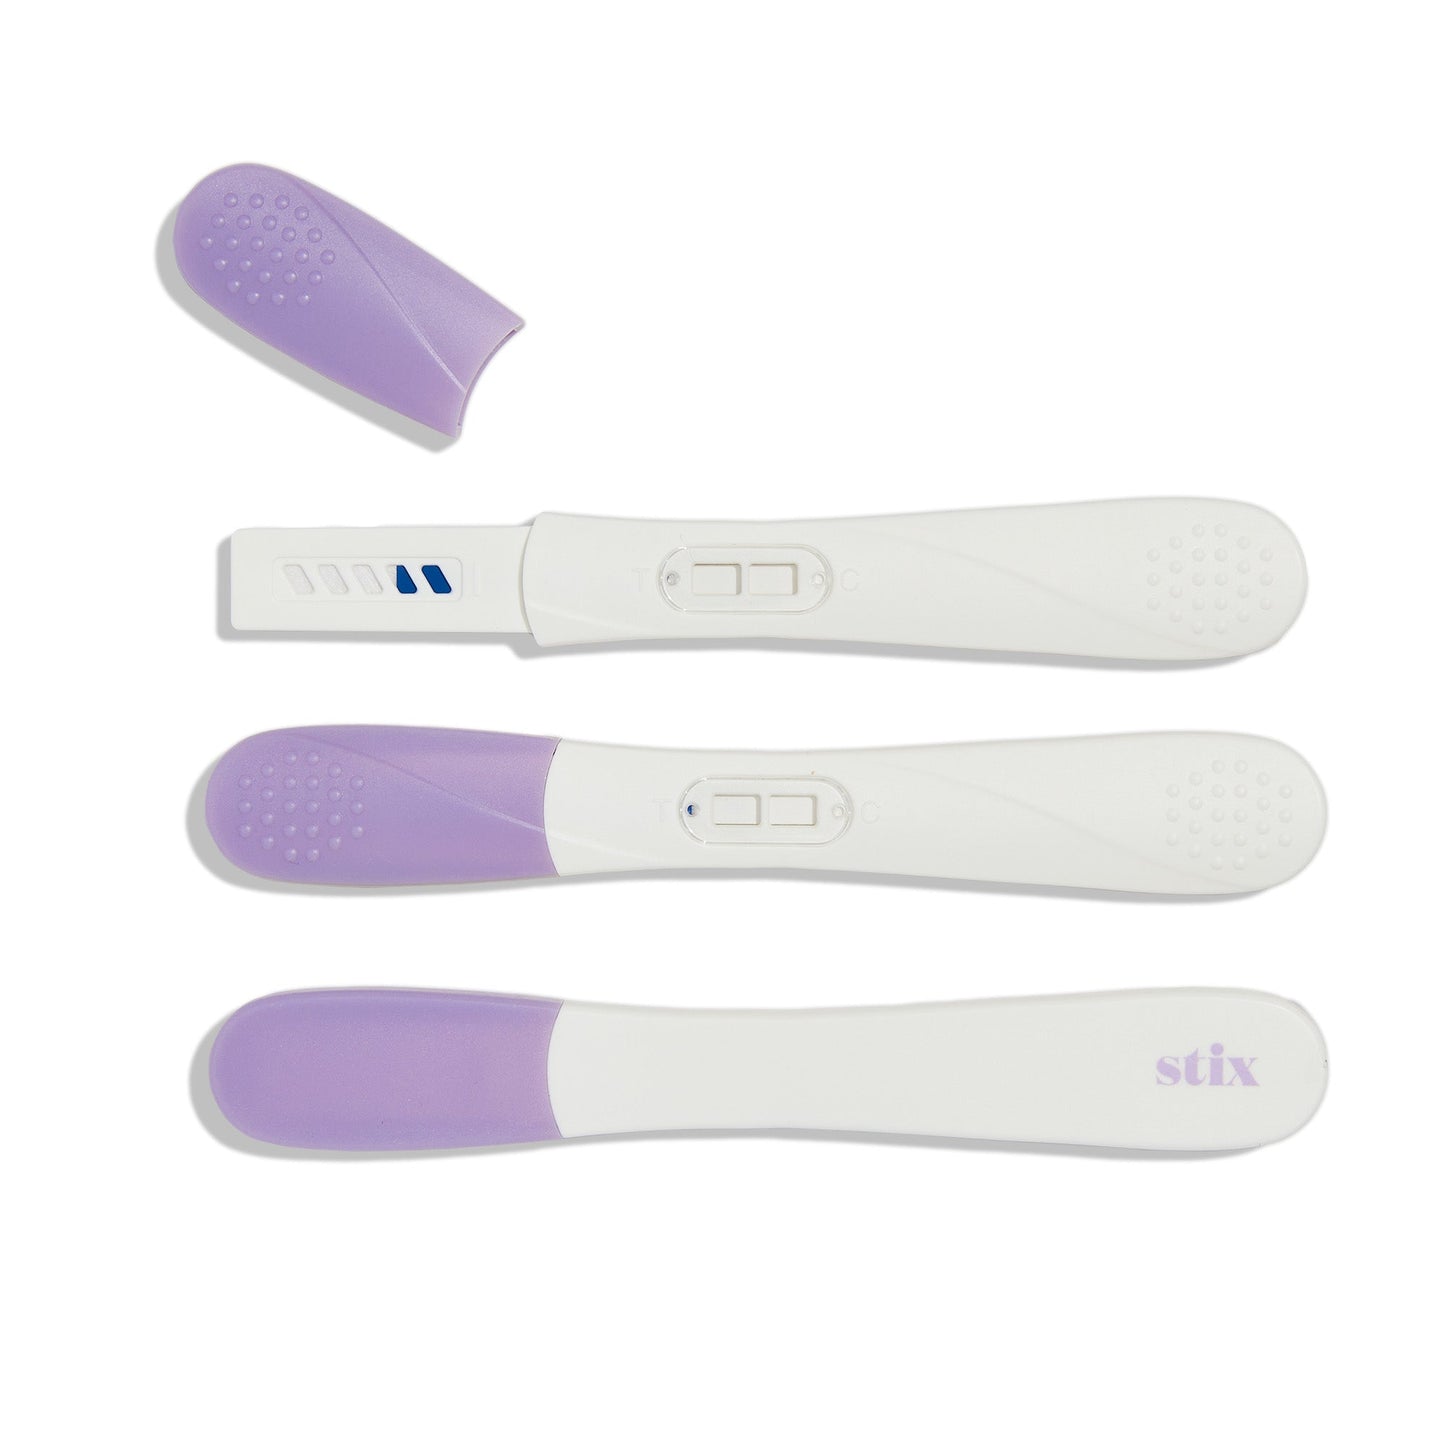 Pregnancy Test Value Pack